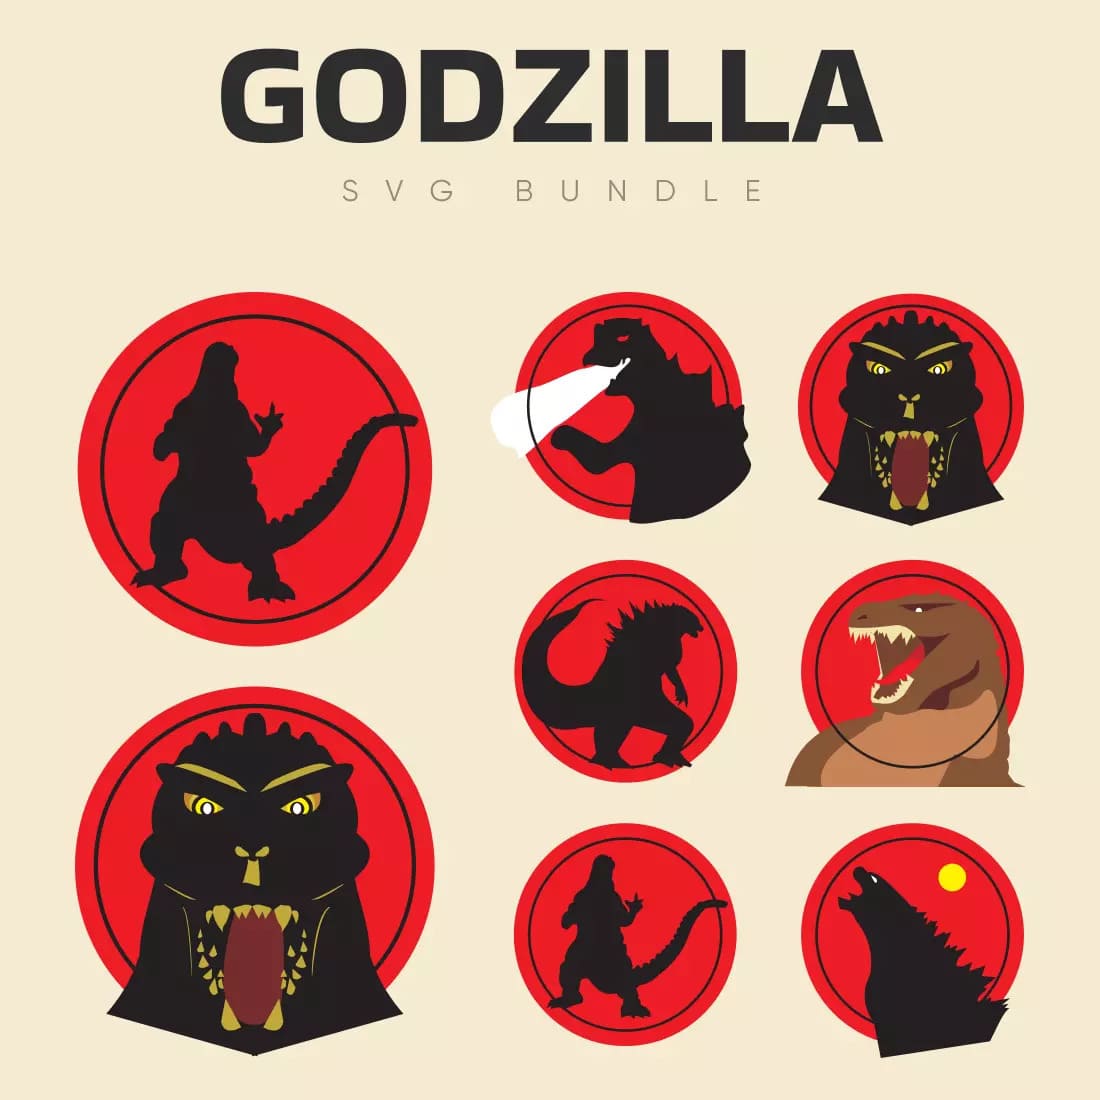 Godzilla SVG Bundle Preview image.